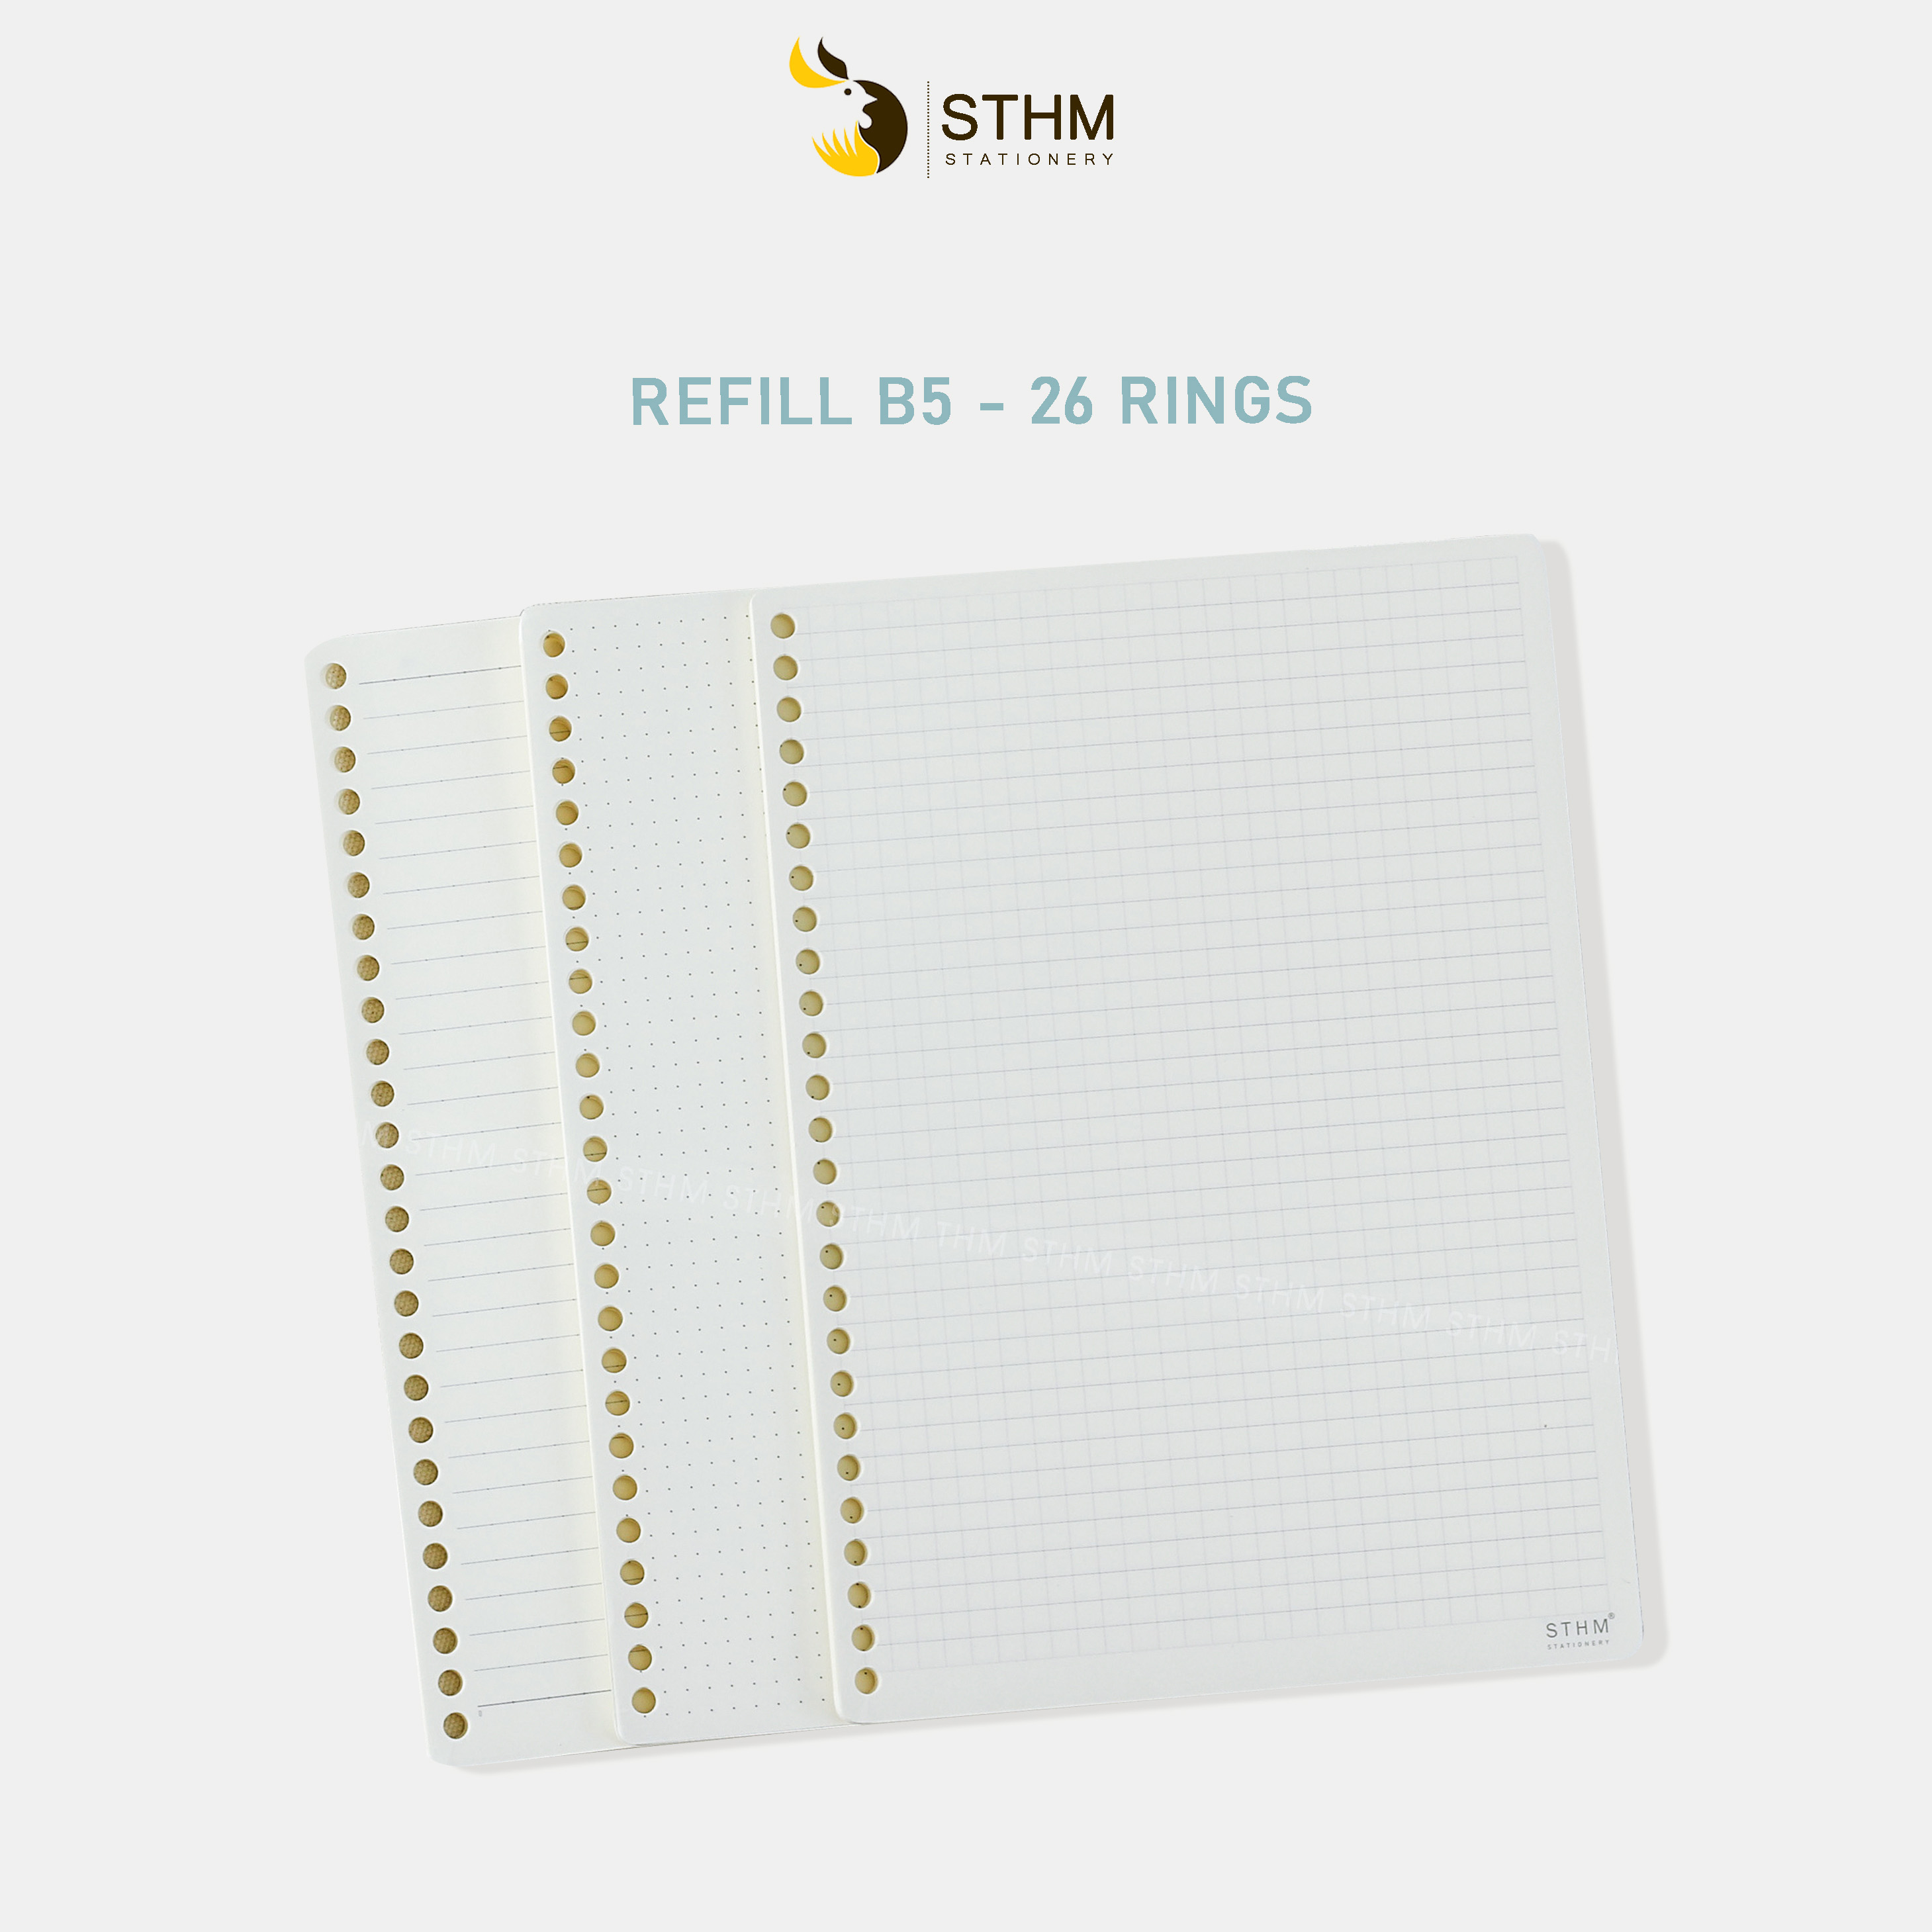 [STHM stationery] - Ruột giấy refill B5 26 lỗ - 50 tờ kem 80gsm